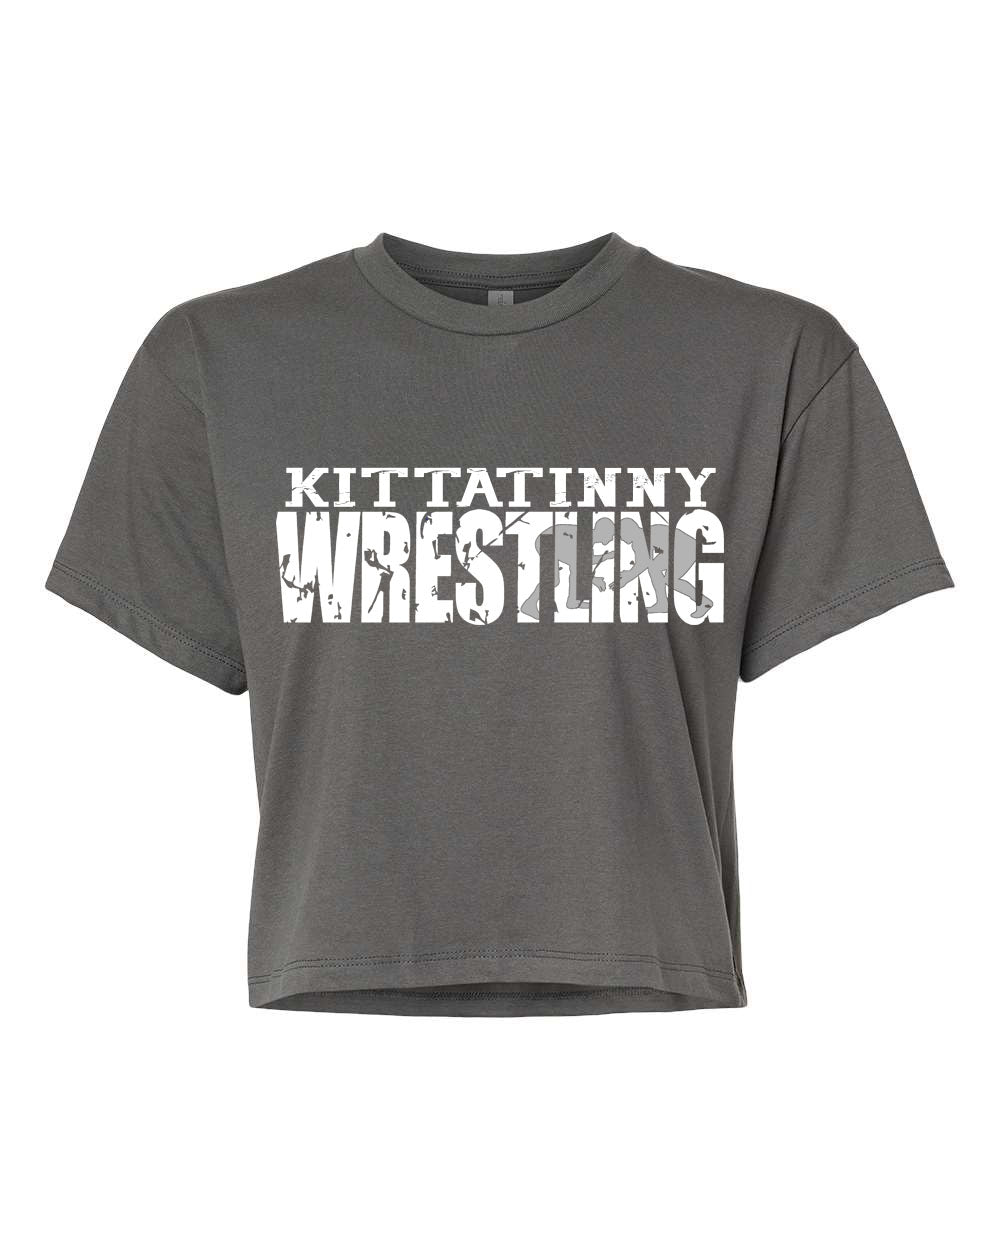 Kittatinny Wrestling design 2 Crop Top